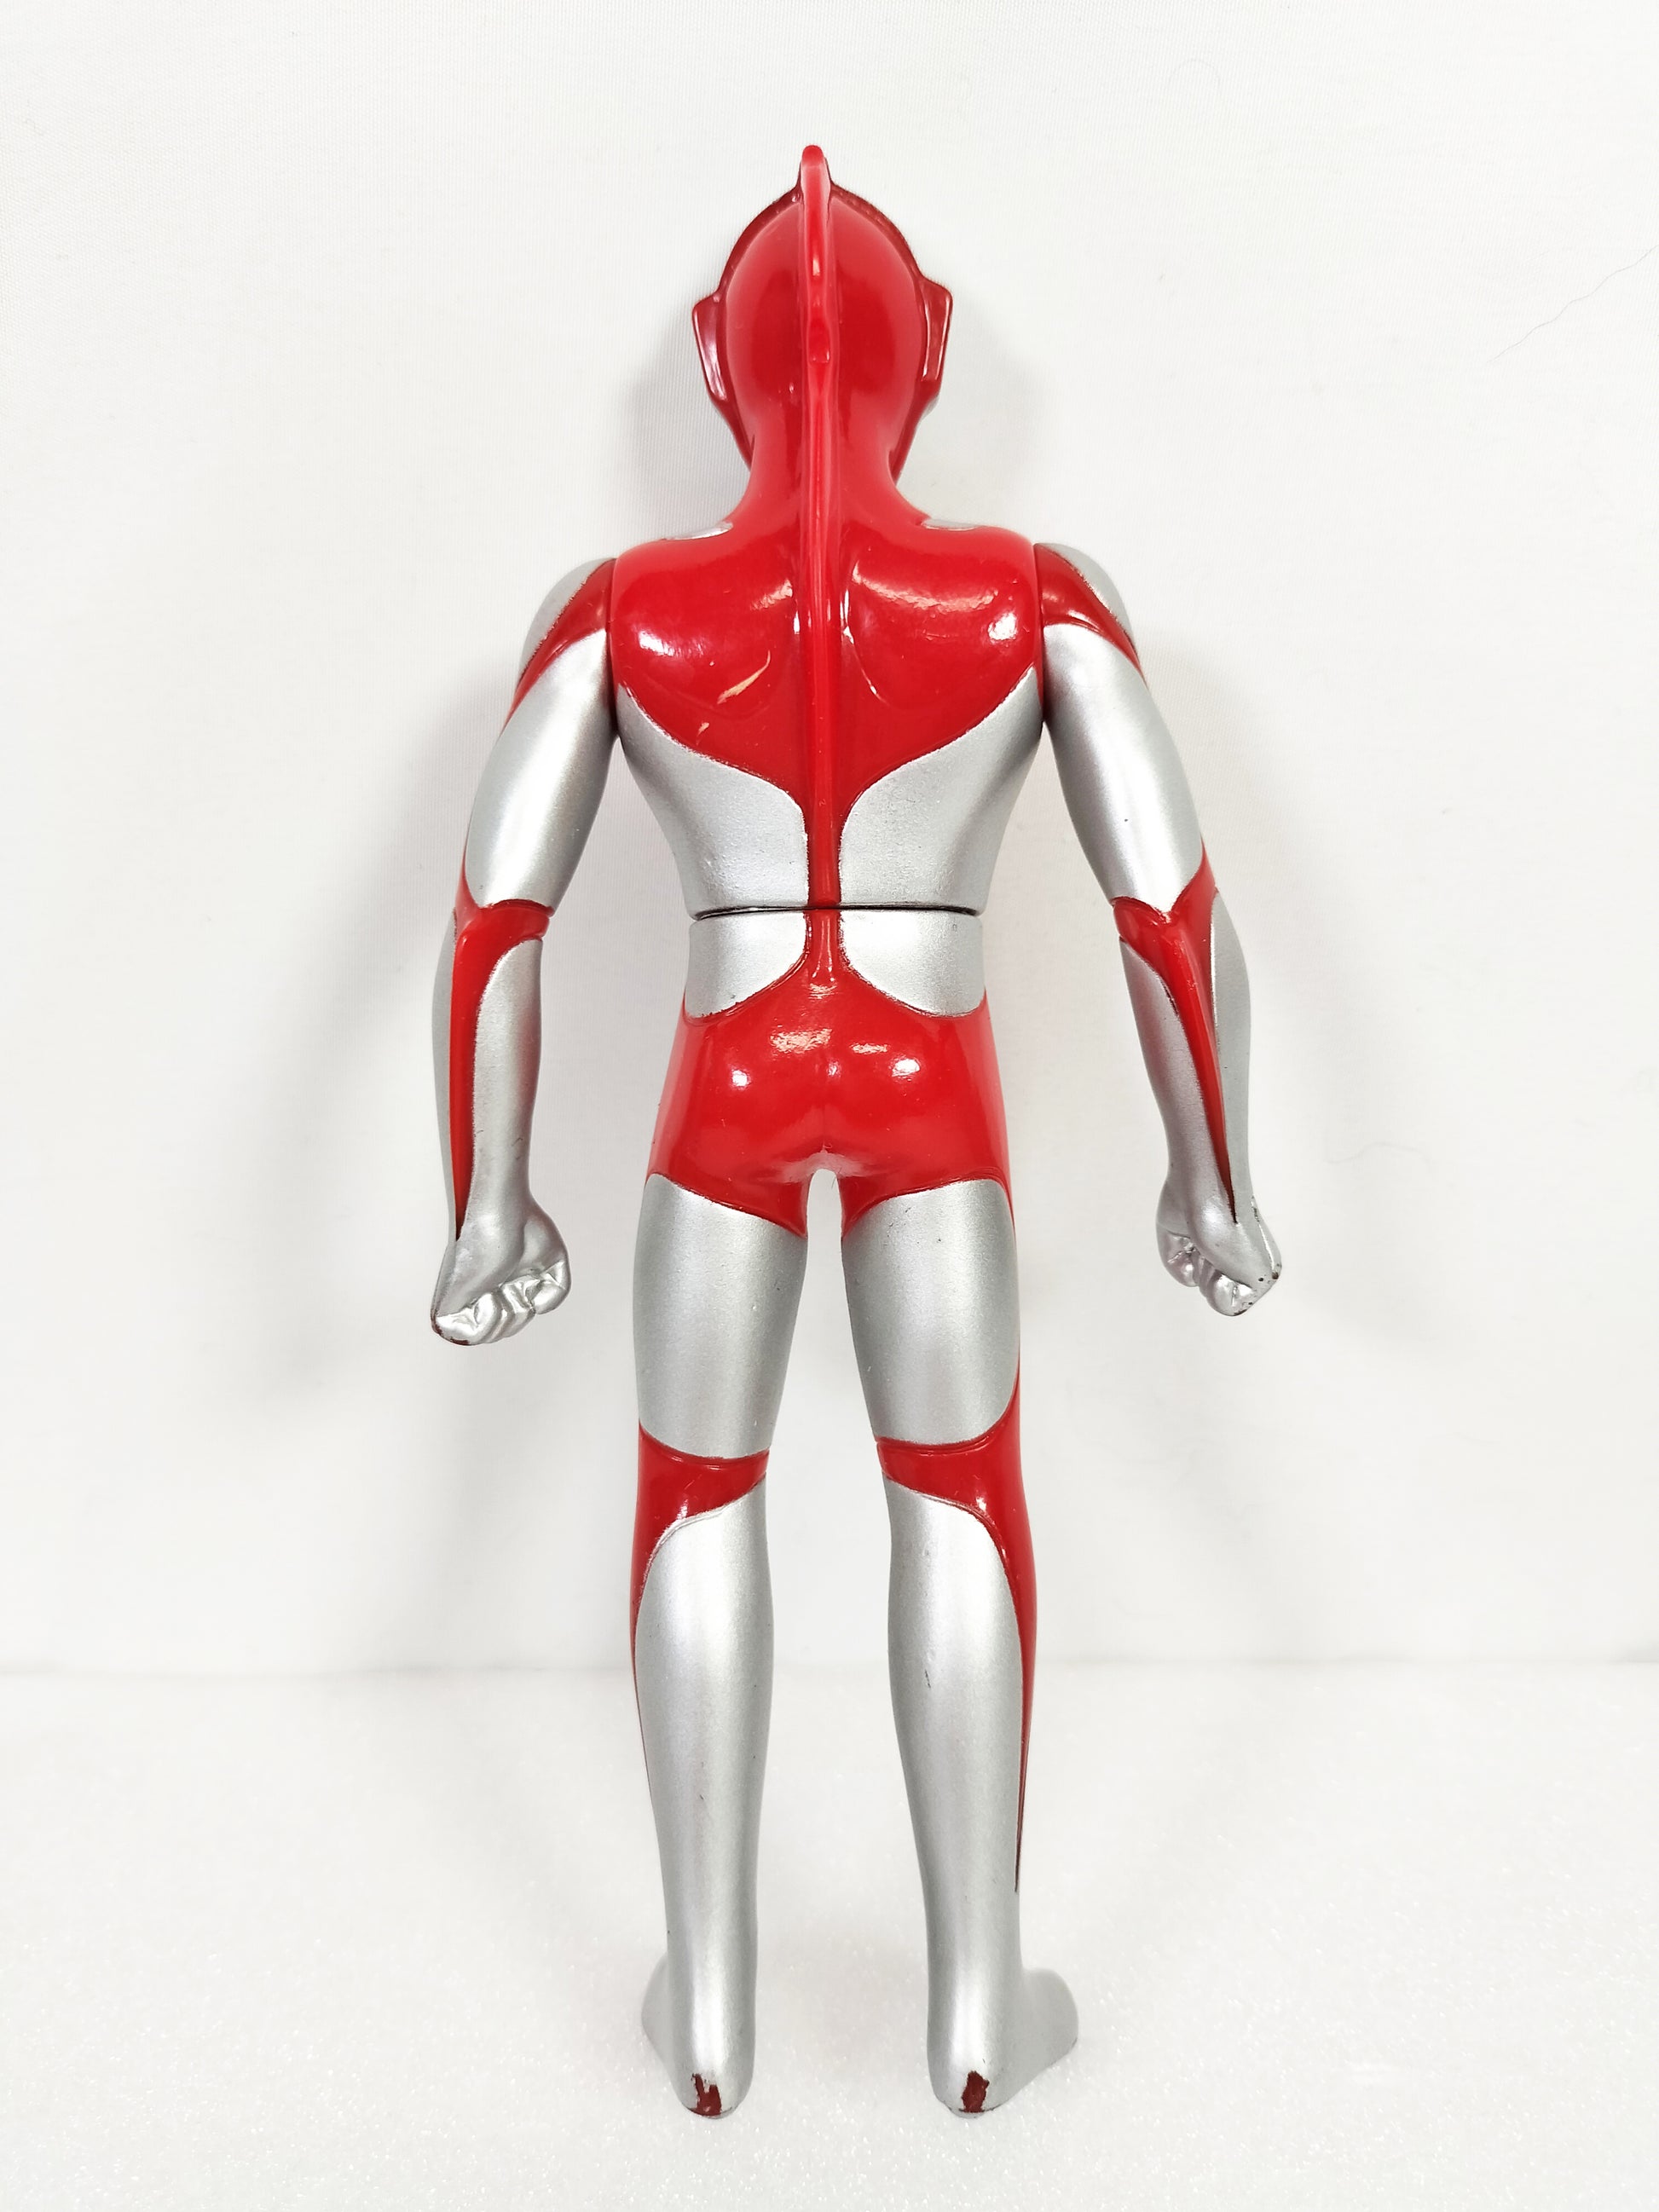 Colecionável Omni-Man Invencível Estatueta Action Figure 17cm Altura